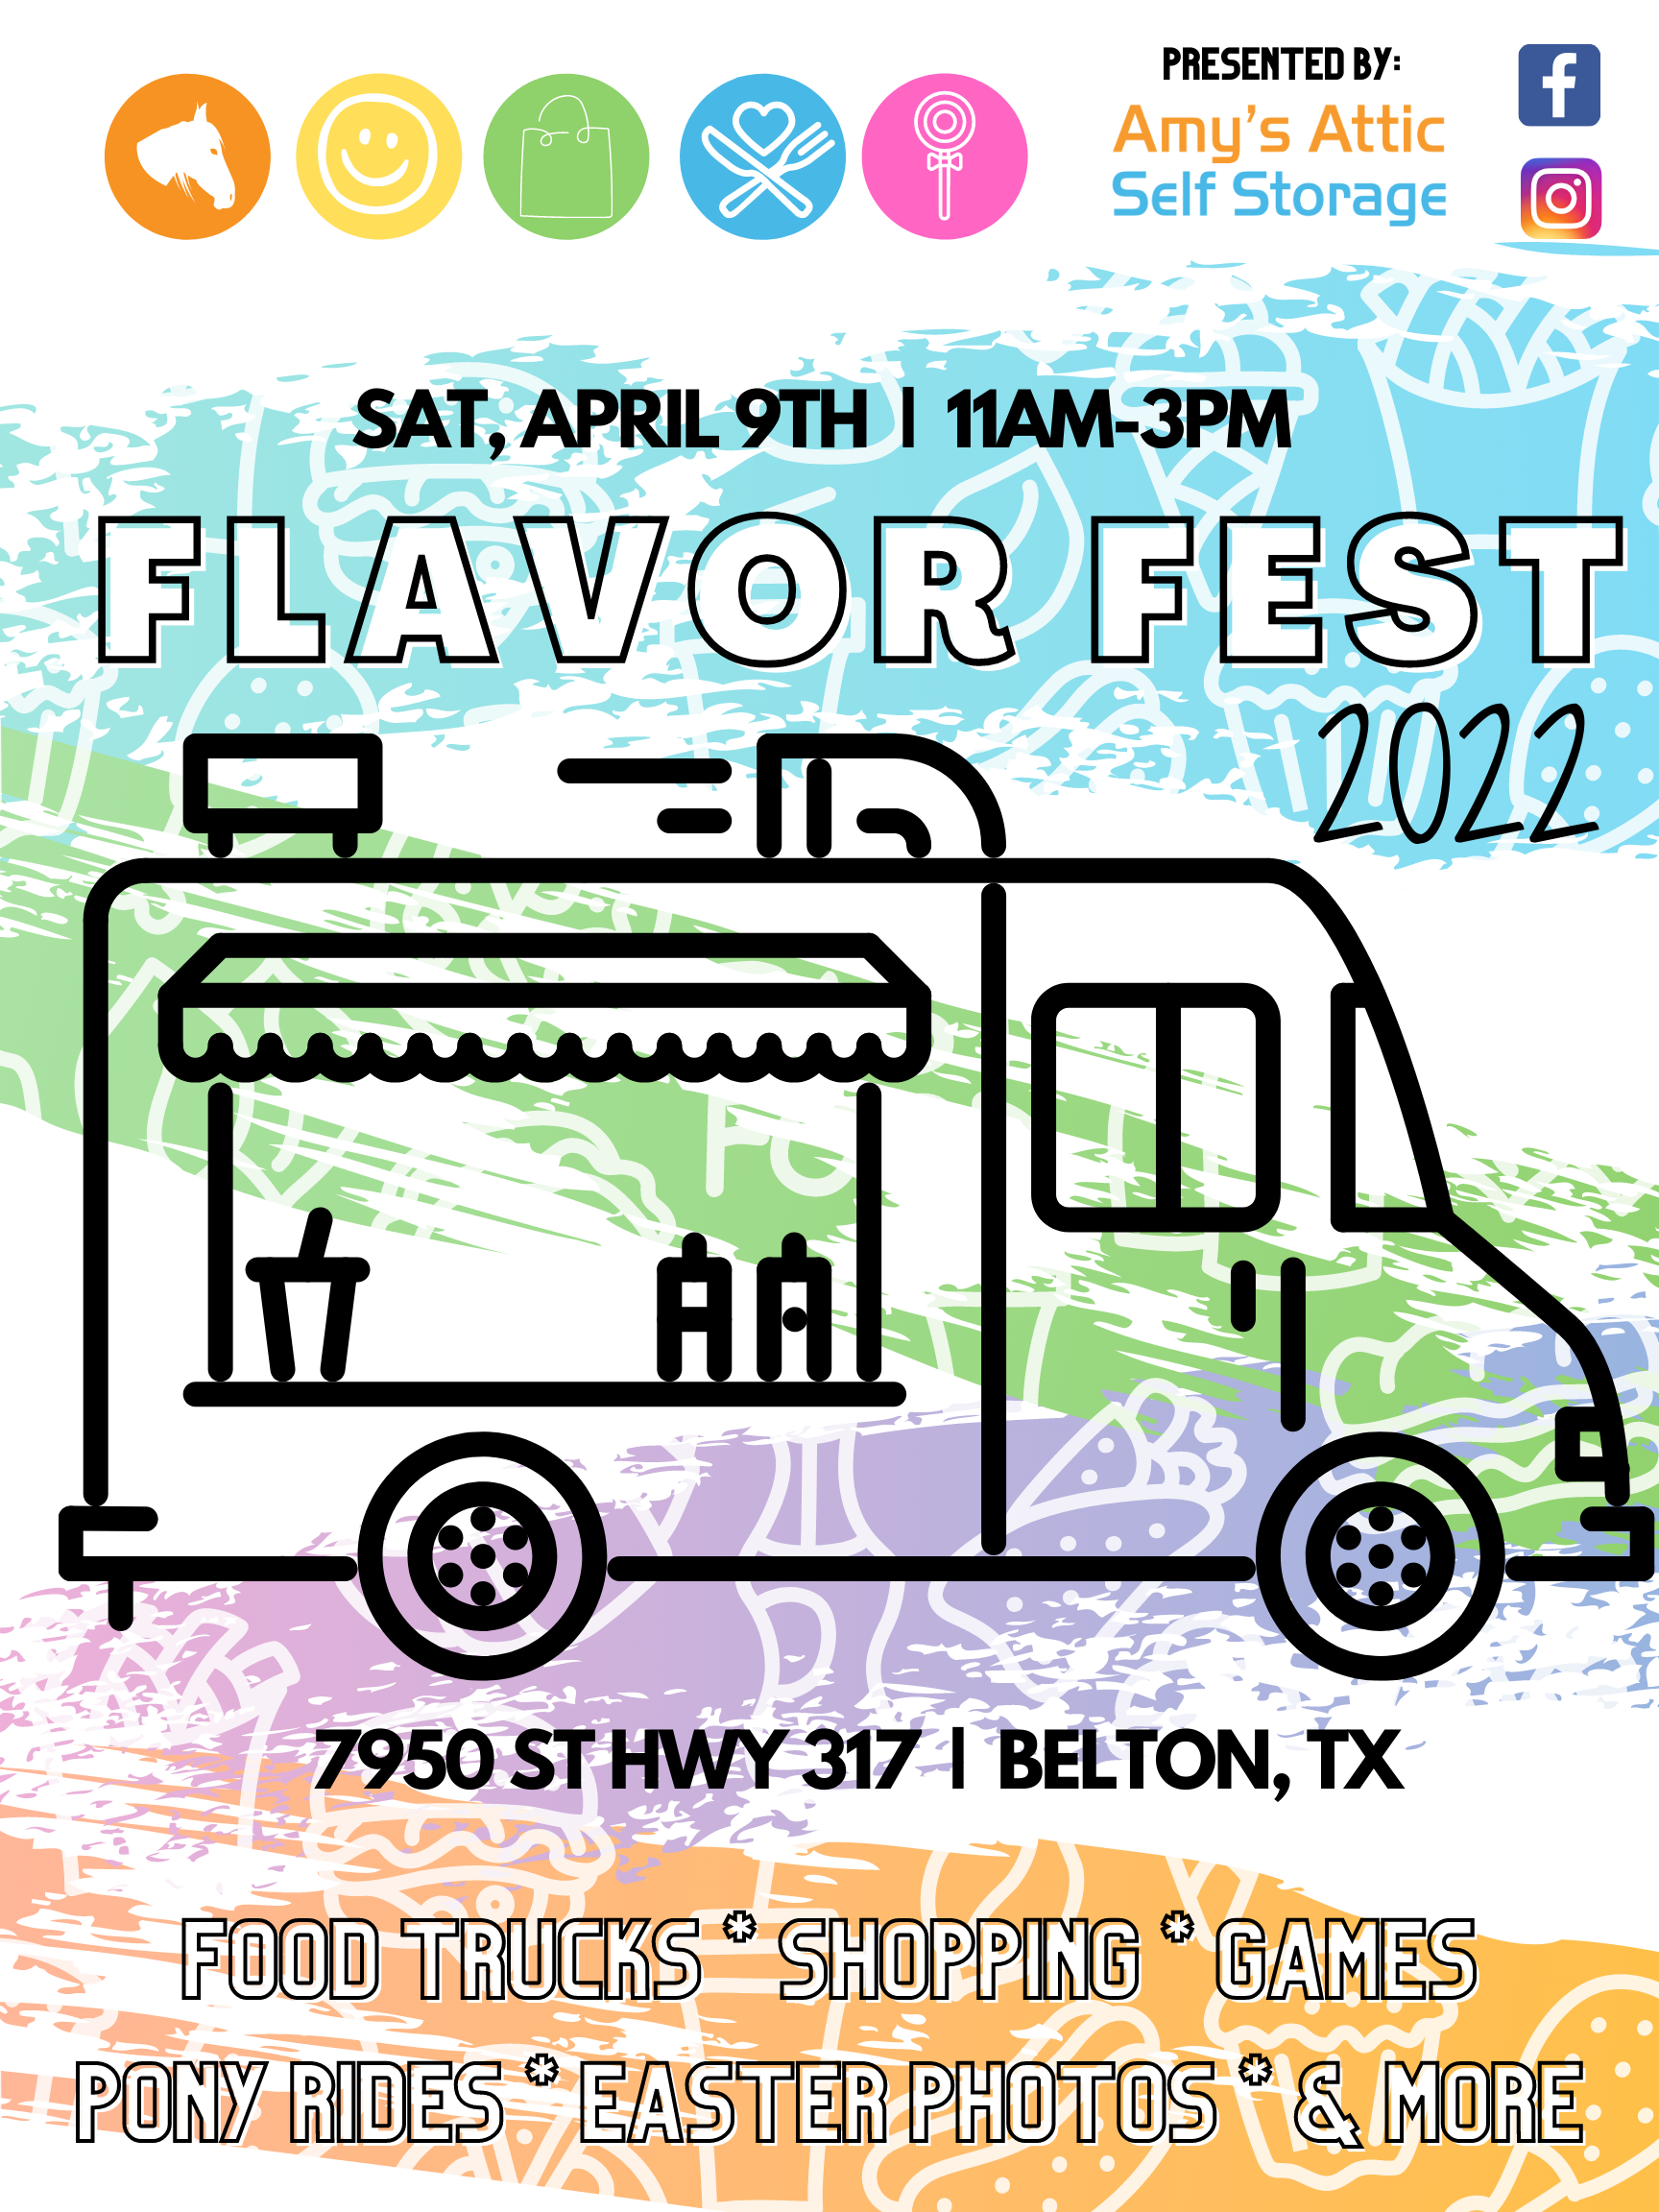 Fall Food Truck Festival